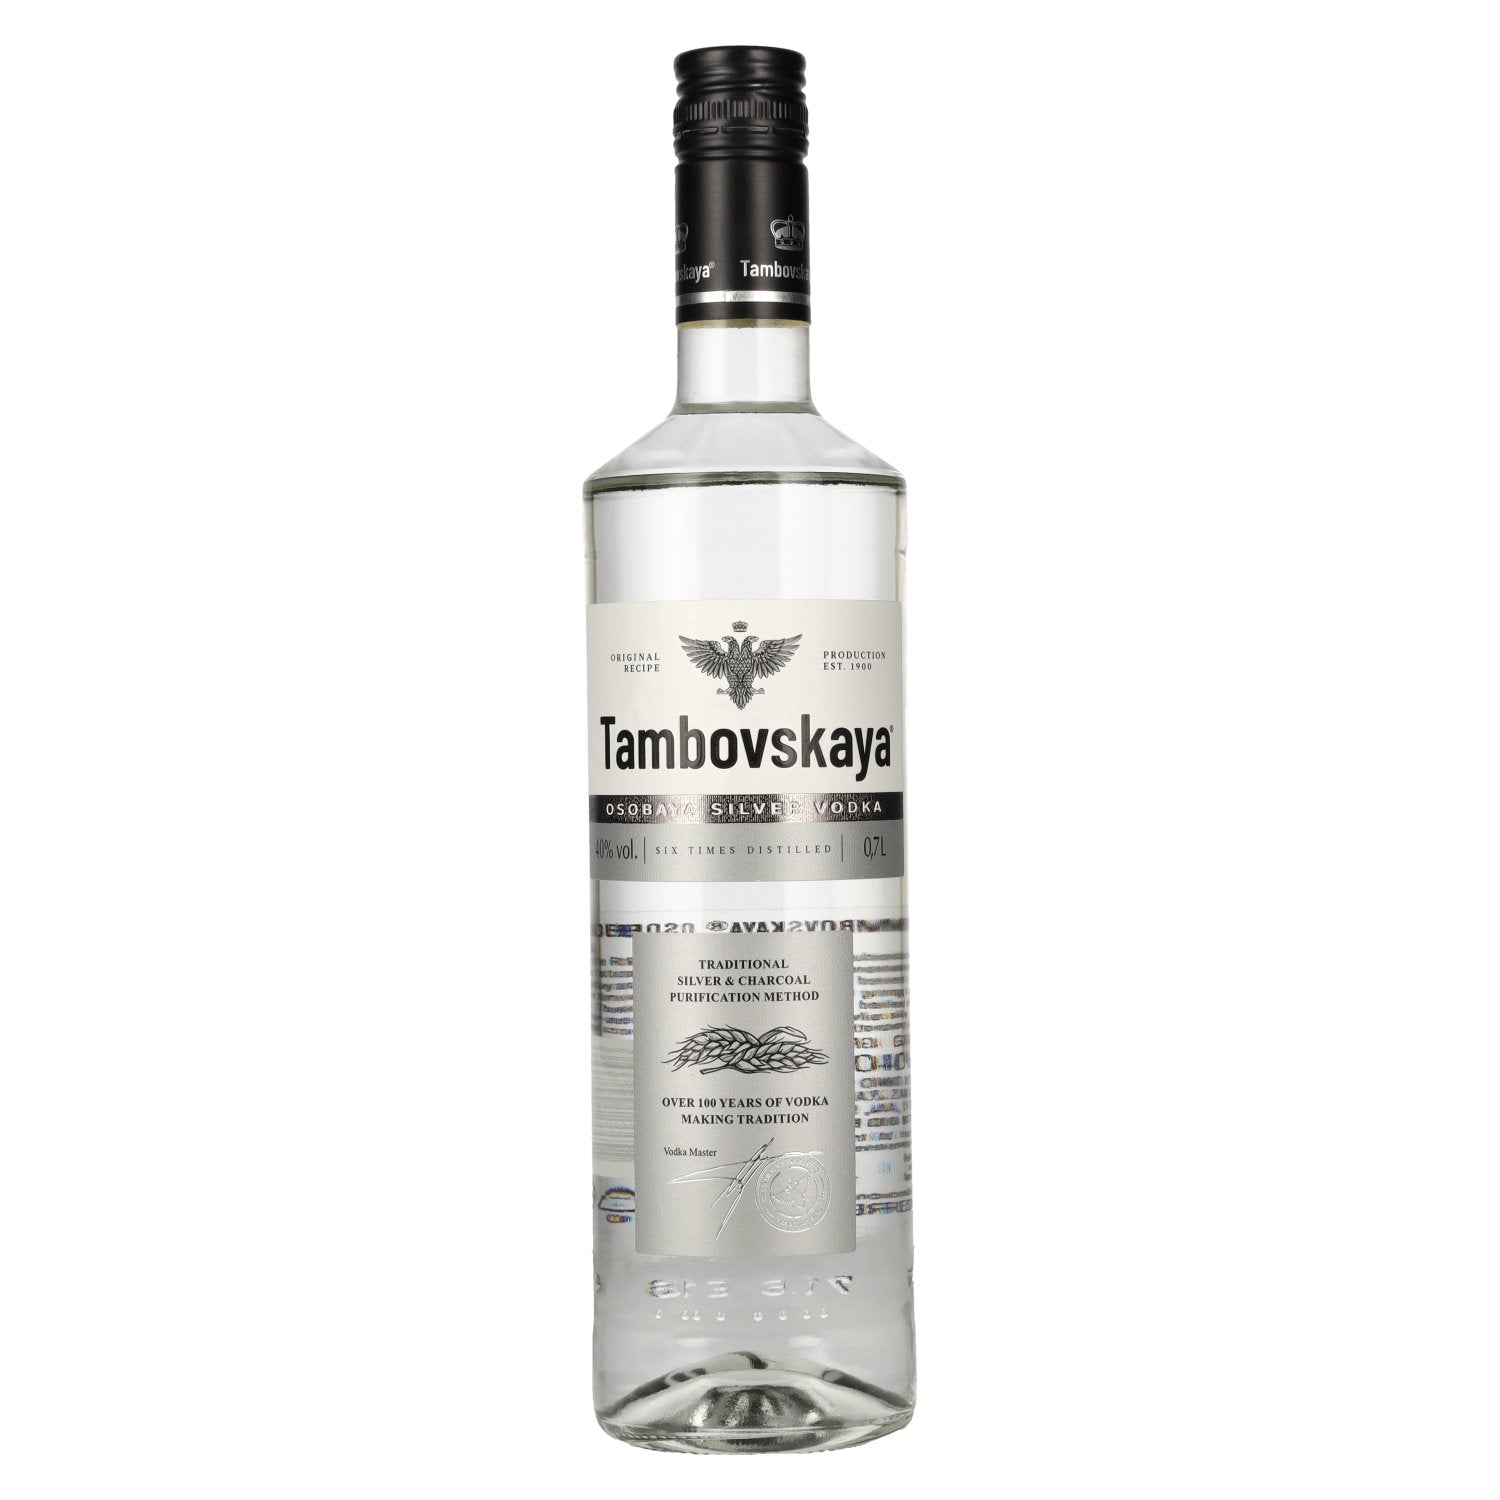 Tambovskaya Osobaya Silver Vodka 40% Vol. 0,7l